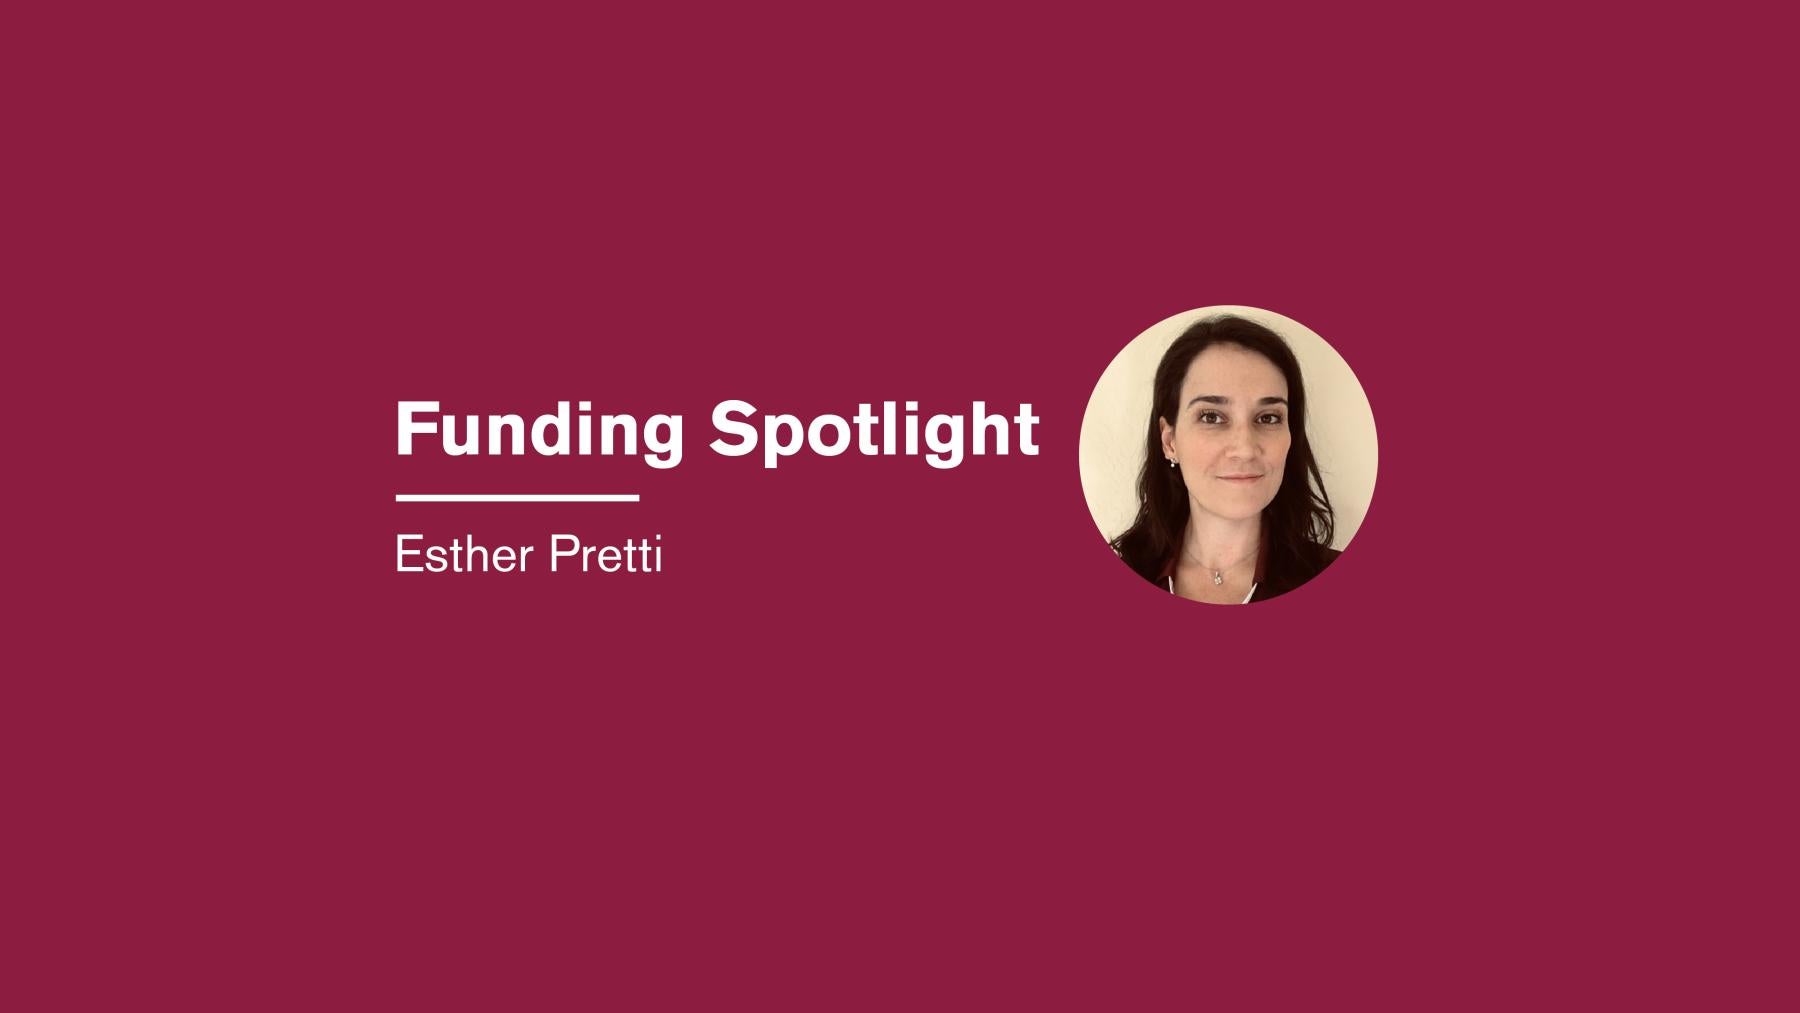 Graduate Student Funding Spotlight: Esther Pretti